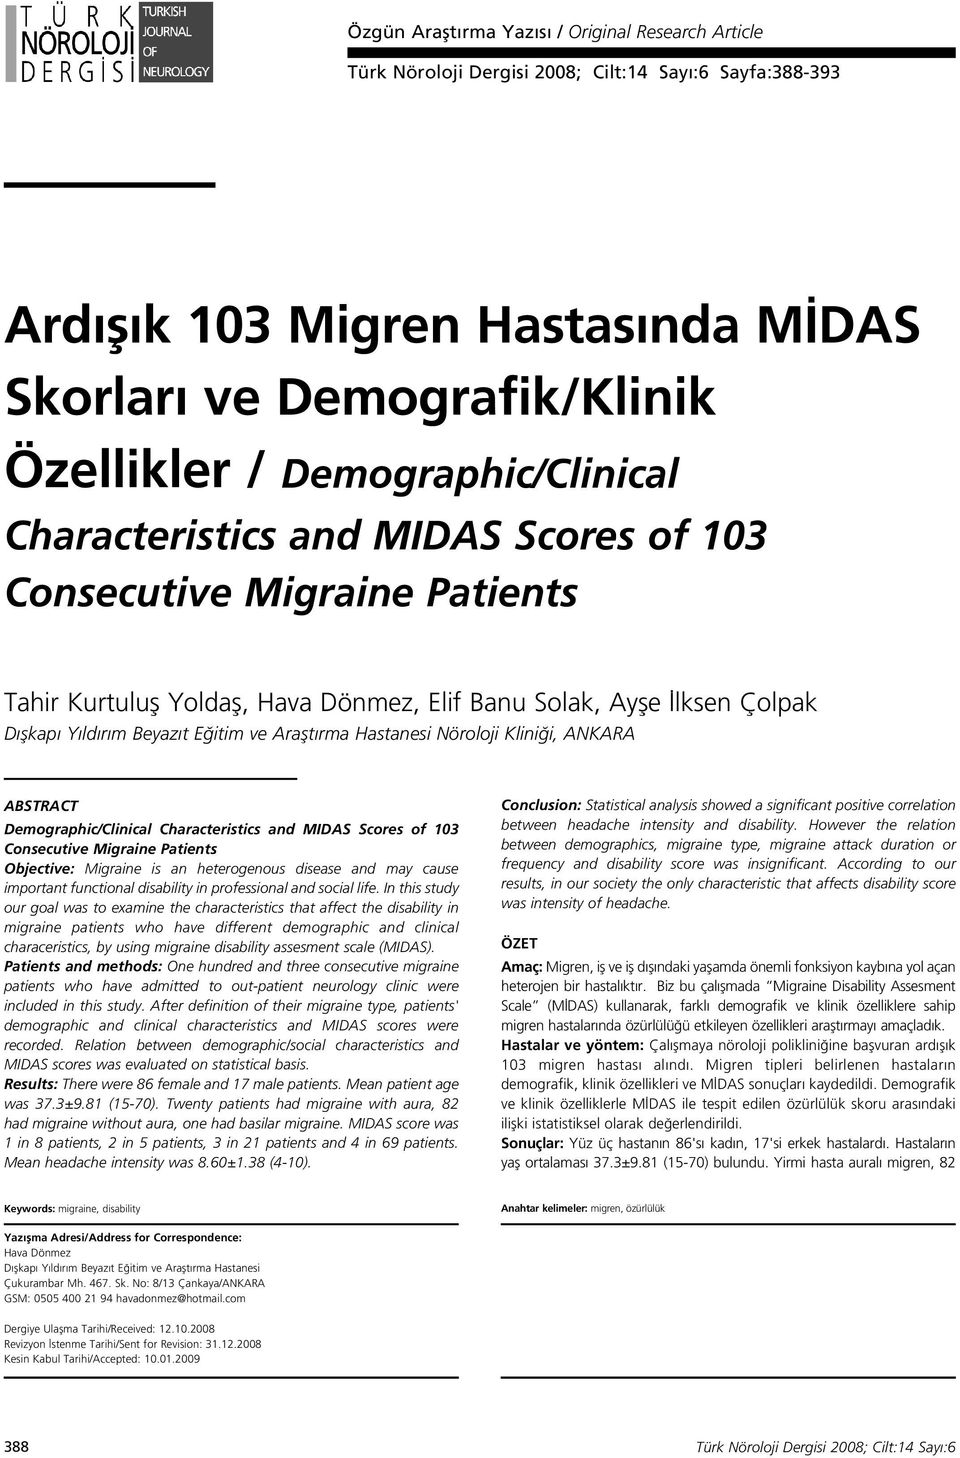 Araflt rma Hastanesi Nöroloji Klini i, ANKARA ABSTRACT Demographic/Clinical Characteristics and MIDAS Scores of 3 Consecutive Migraine Patients Objective: Migraine is an heterogenous disease and may